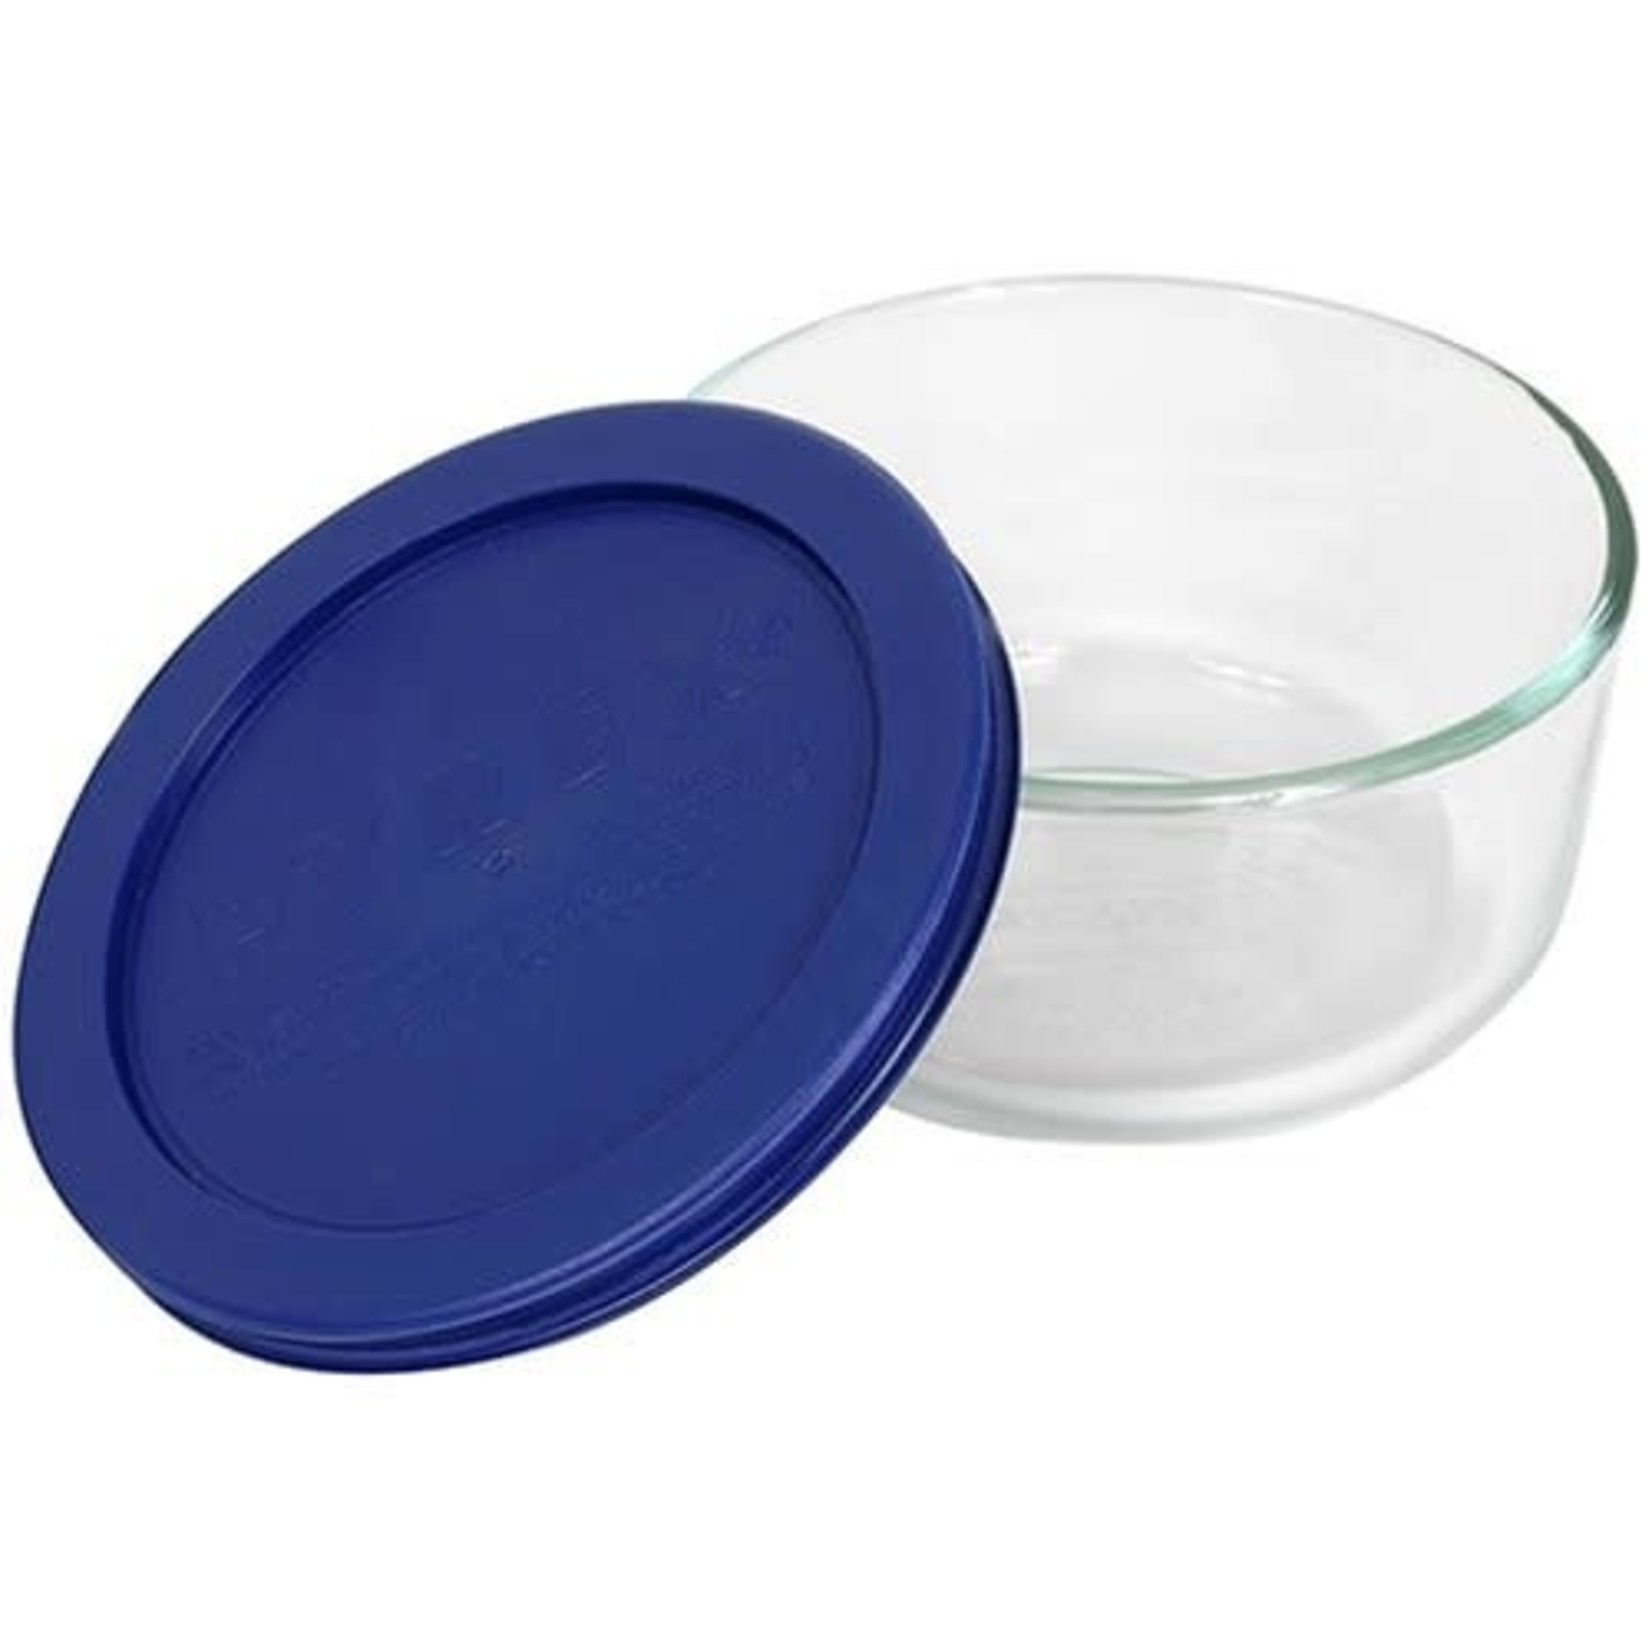 https://cdn.shoplightspeed.com/shops/627977/files/53498986/1652x1652x2/pyrex-2-cup-simply-storage-glass-container-blue.jpg